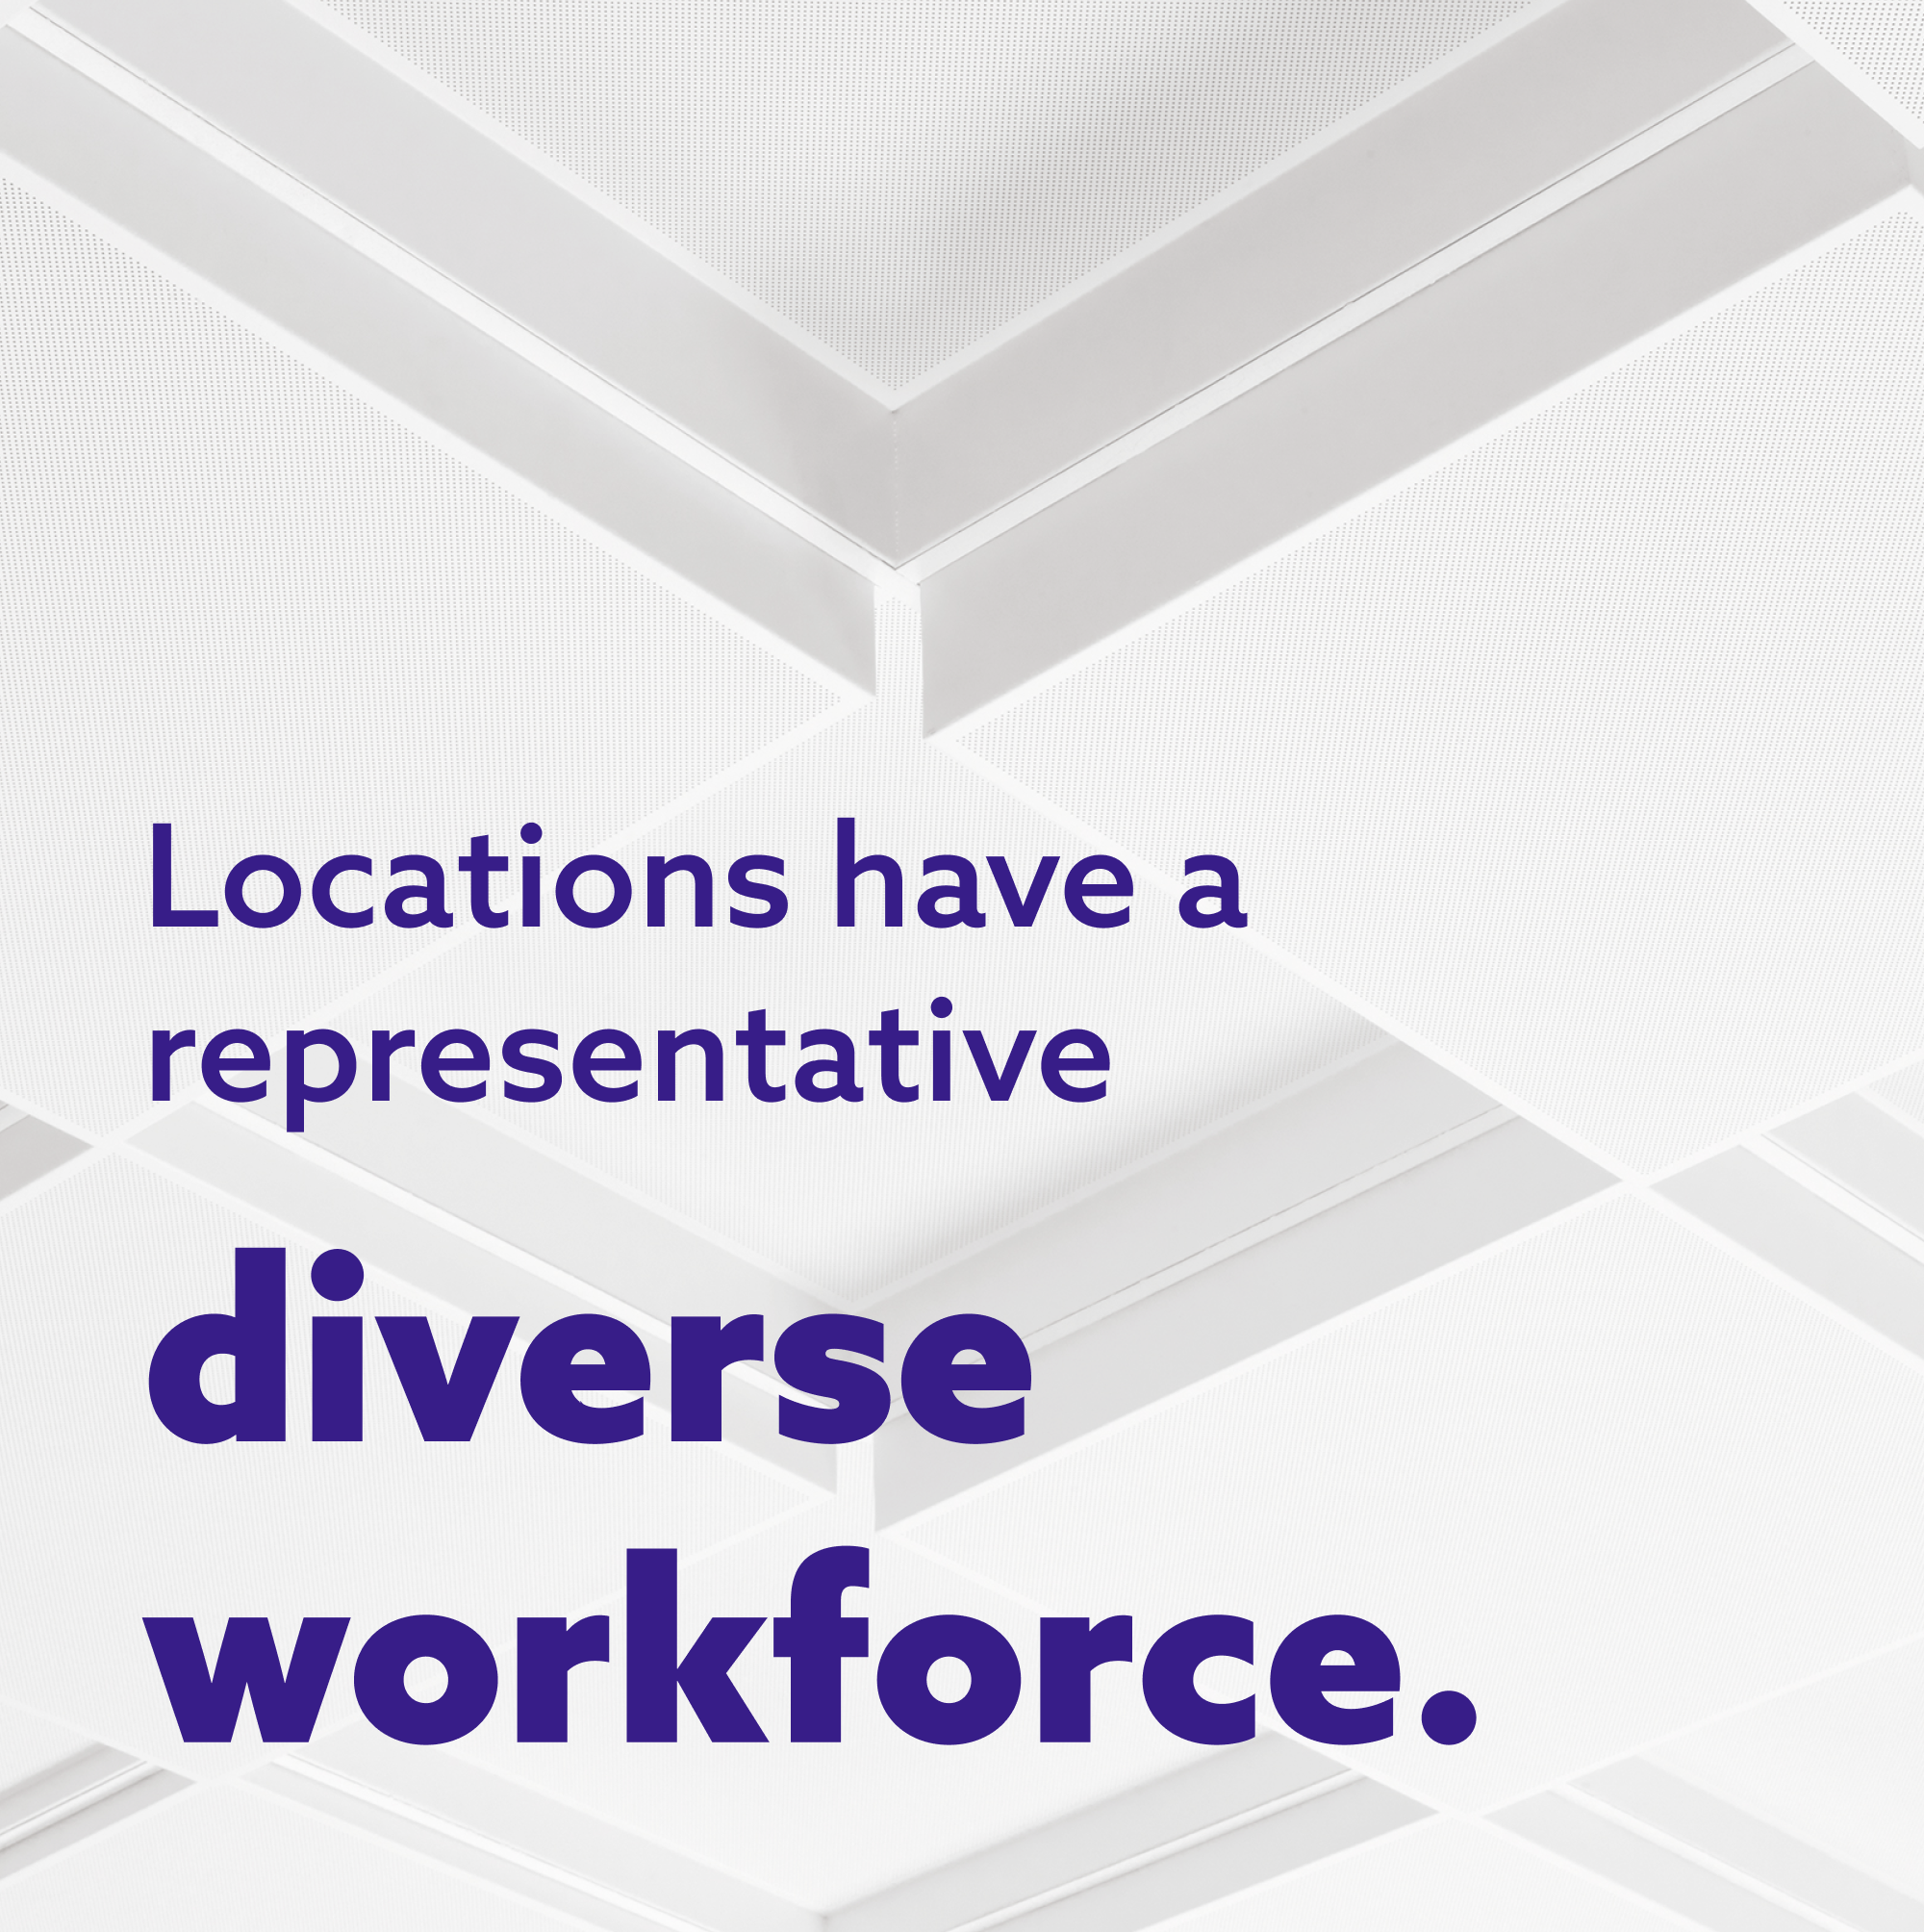 Locations have a representative diverse workforce.